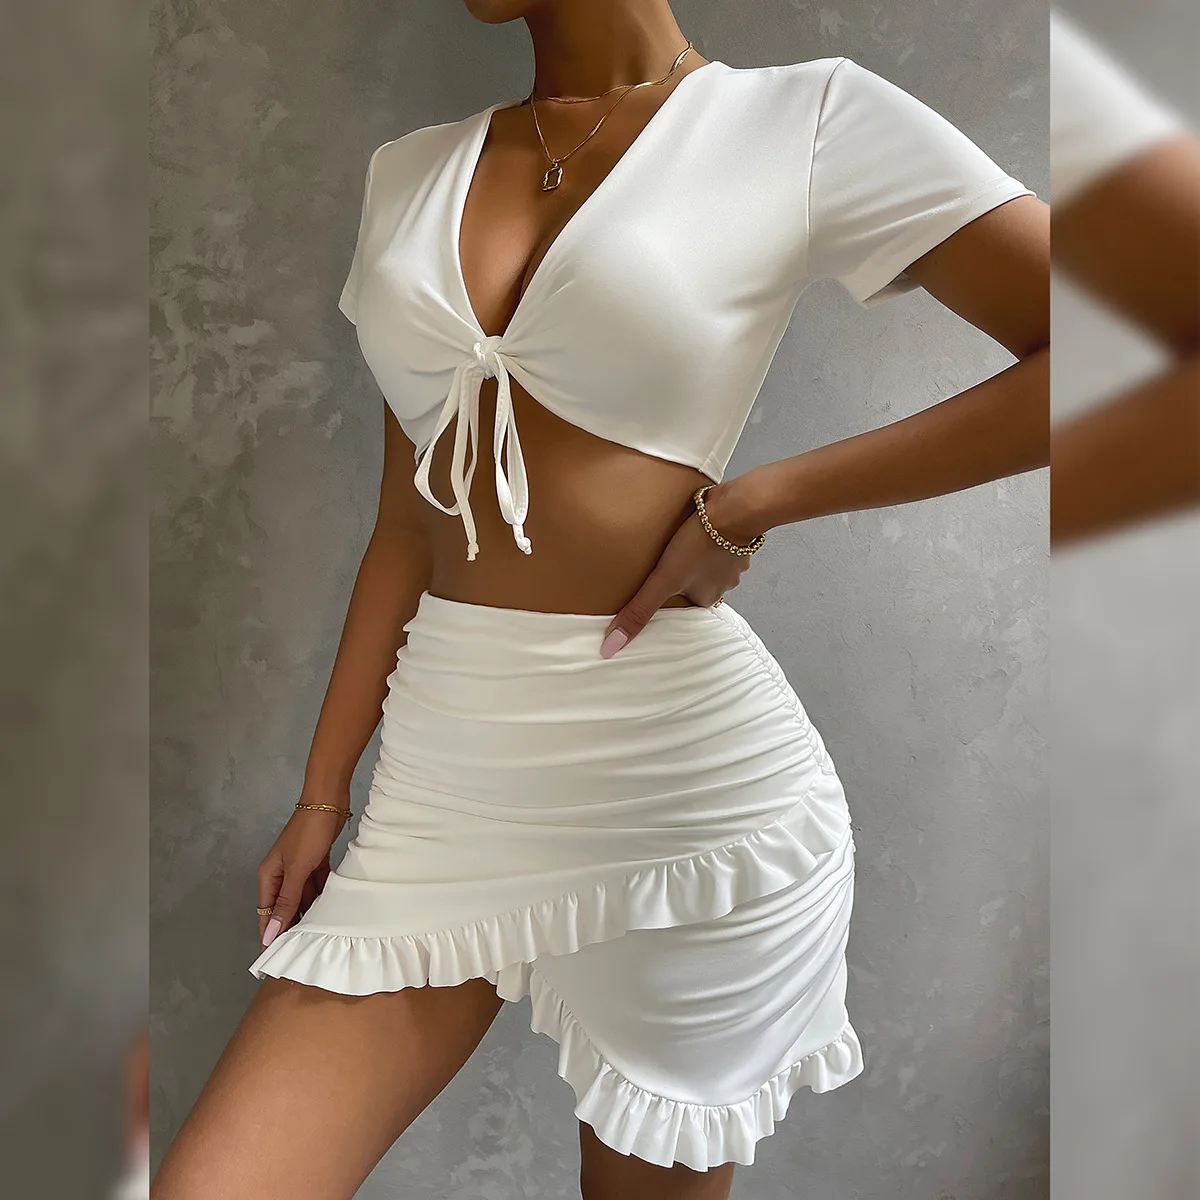 KOLLSEEY Brand  Asymmetrical Fashion Casual Dresses Women Mini Dress Summer Elegant Women's Dresses enlarge